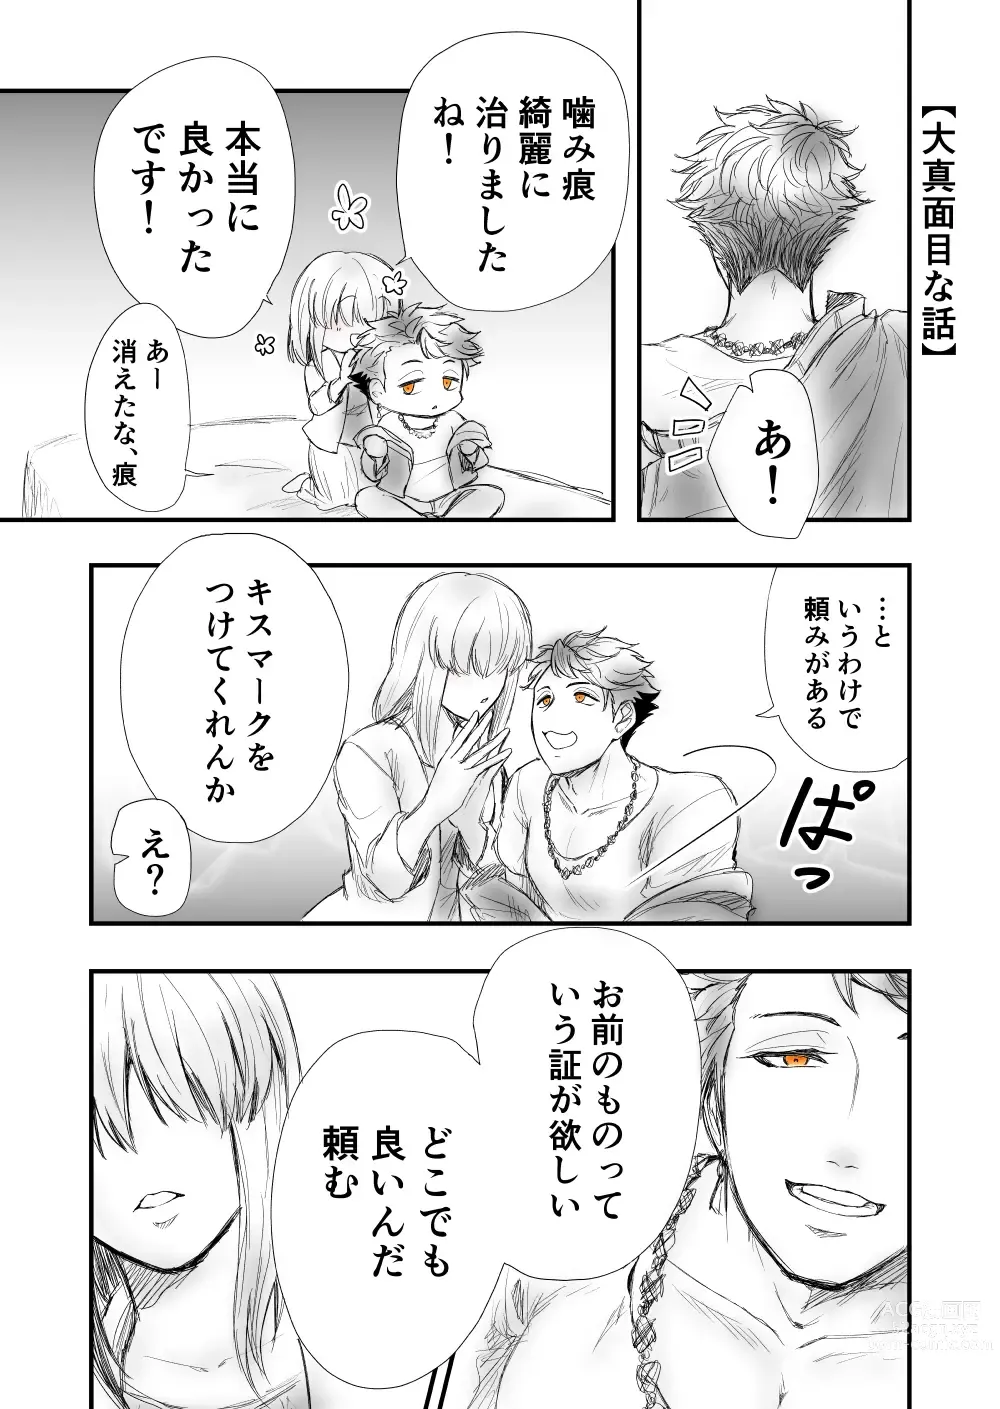 Page 22 of doujinshi 2